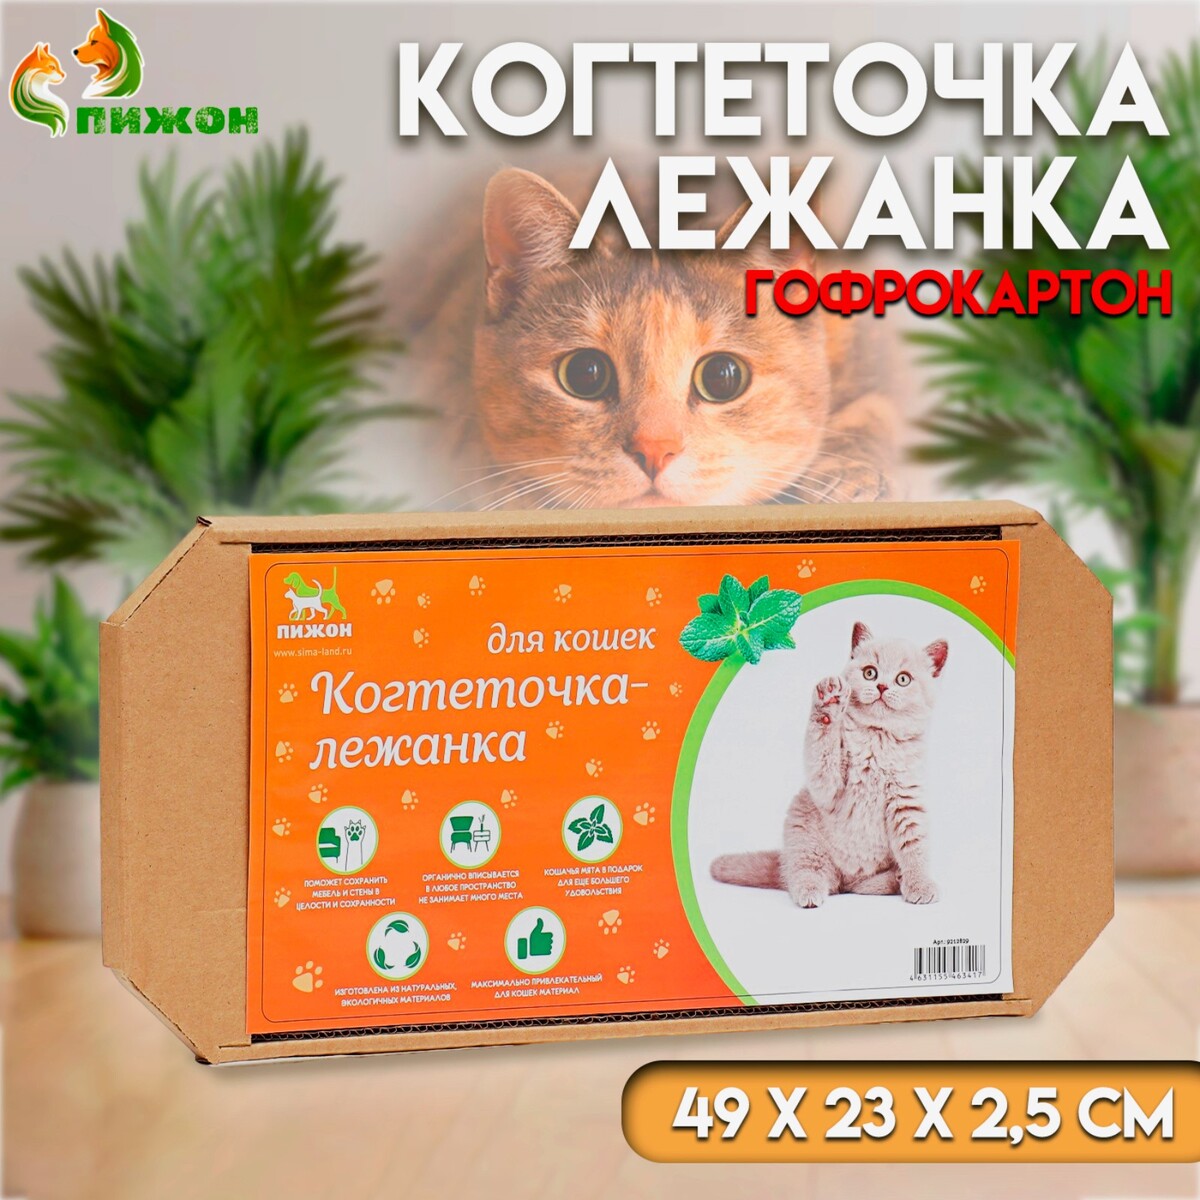 Когтеточка-лежанка для кошек домашняя когтеточка лежанка для кошек 56 × 30 см